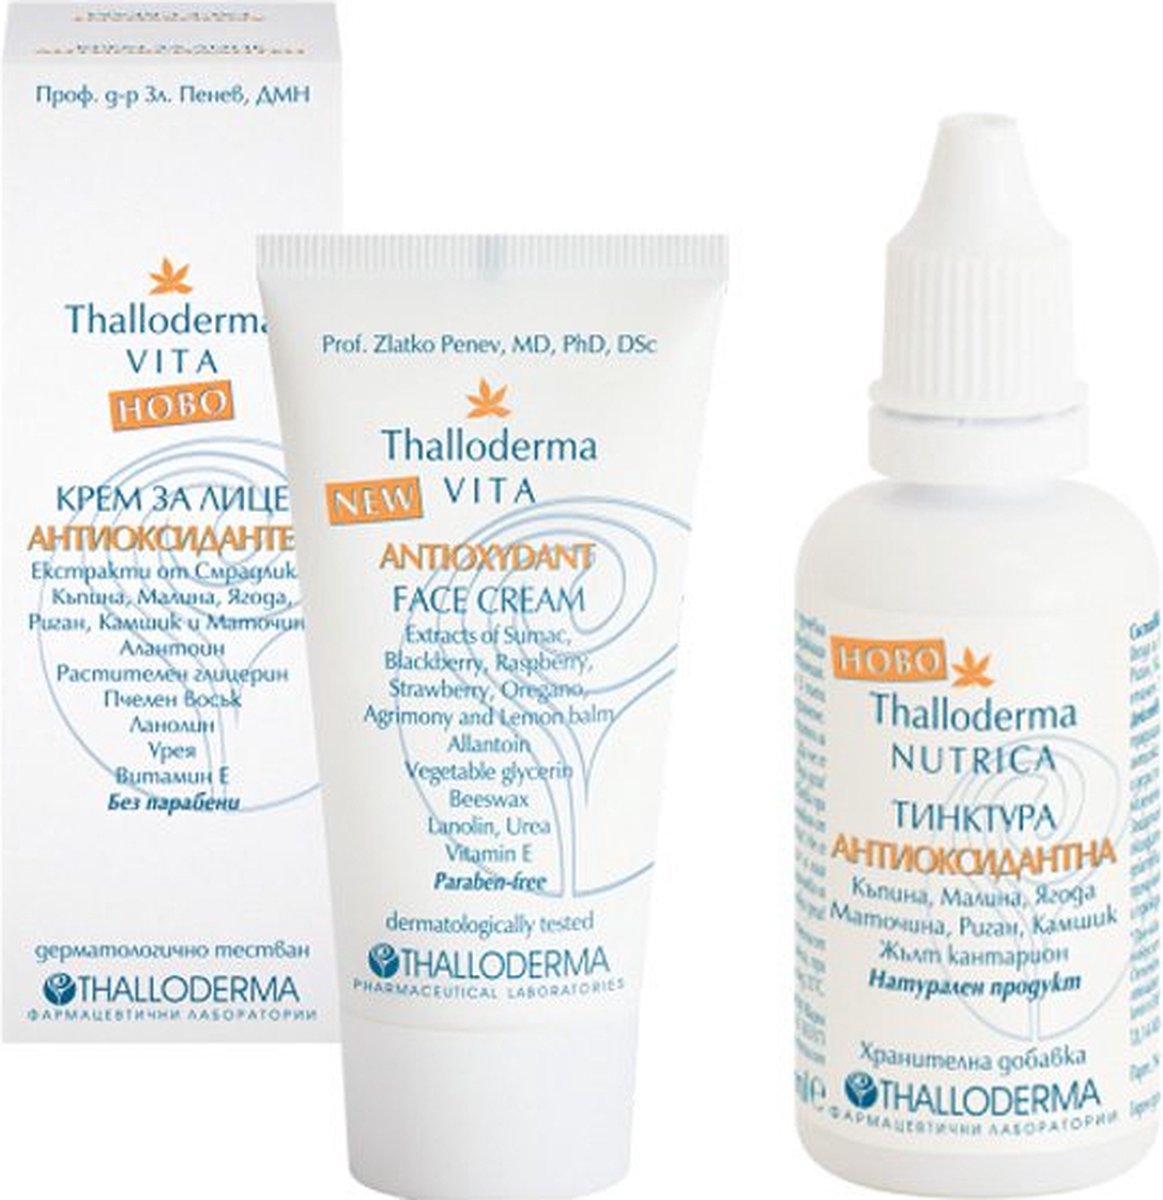 Thalloderma anti-oxidant set van 2 producten - verstevigende gezicht creme - natuurlijke anti-oxidant tinctuur 1x50ml en 1x100ml